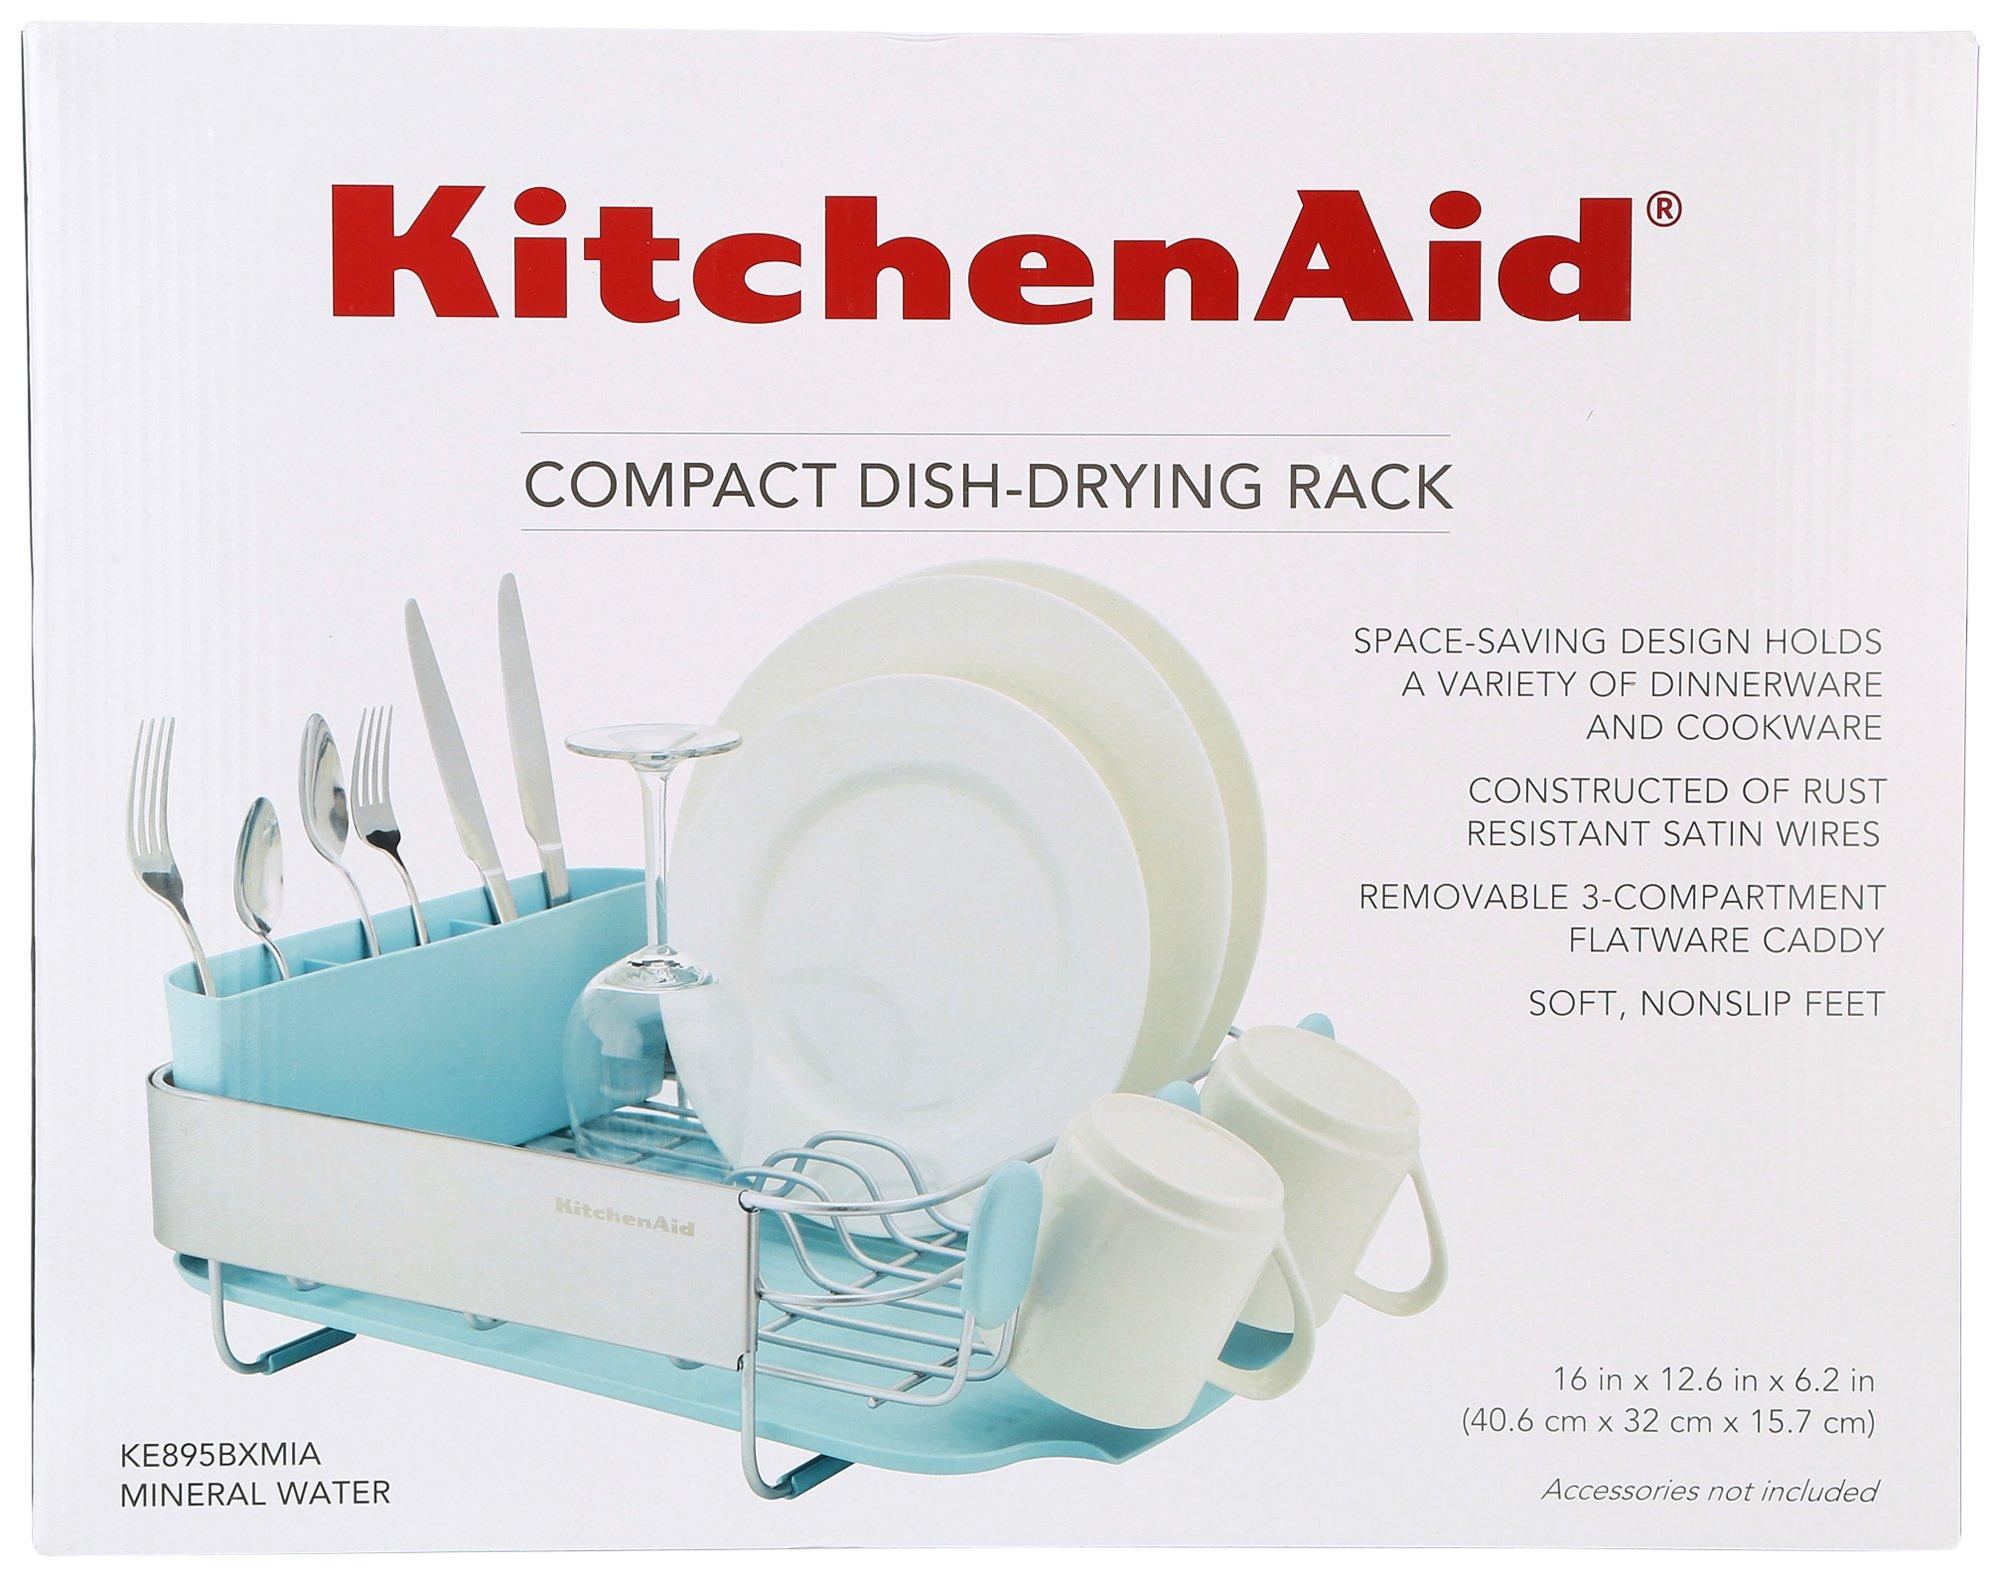 Kitchenaid Compact Dish-Drying Rack